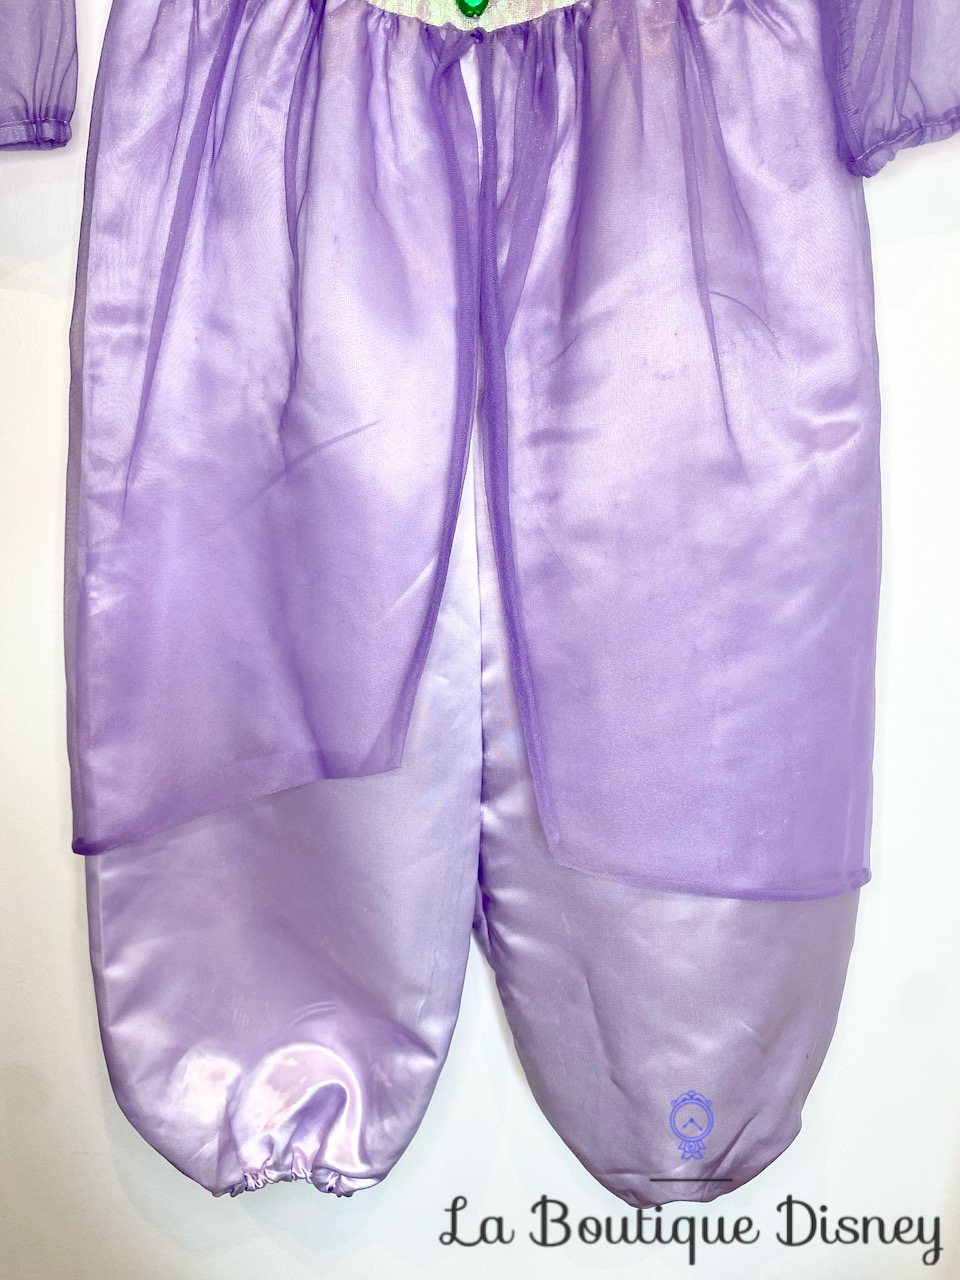 déguisement-jasmine-violet-disneyland-disney-taille-8-ans-aladdin-combinaison-princesse-6